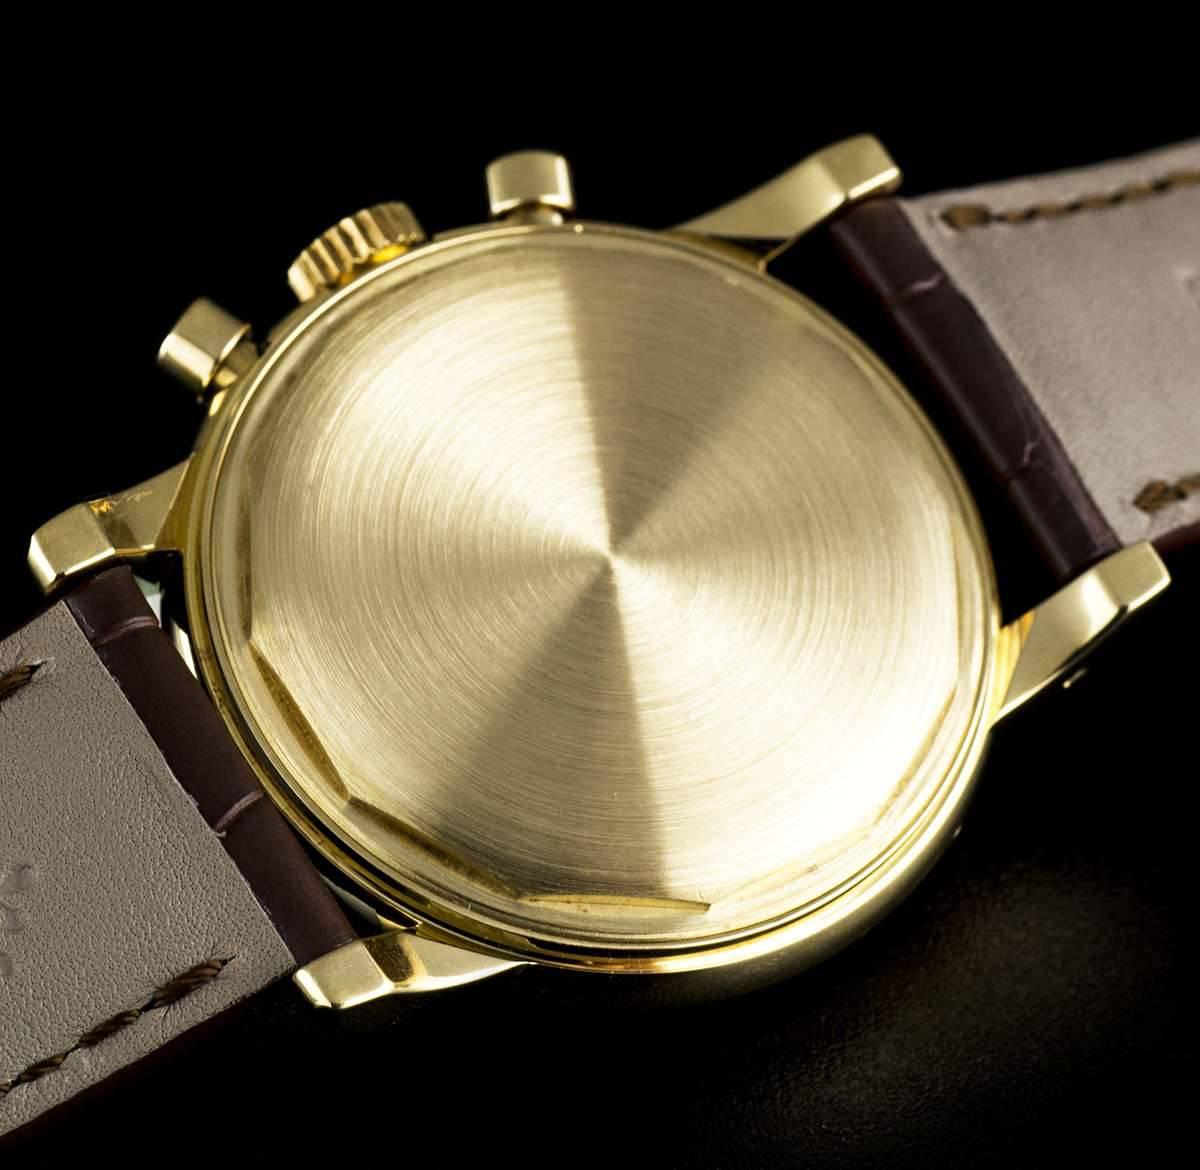 Patek Philippe Gold Perpetual Calendar Chronograph Wristwatch 3